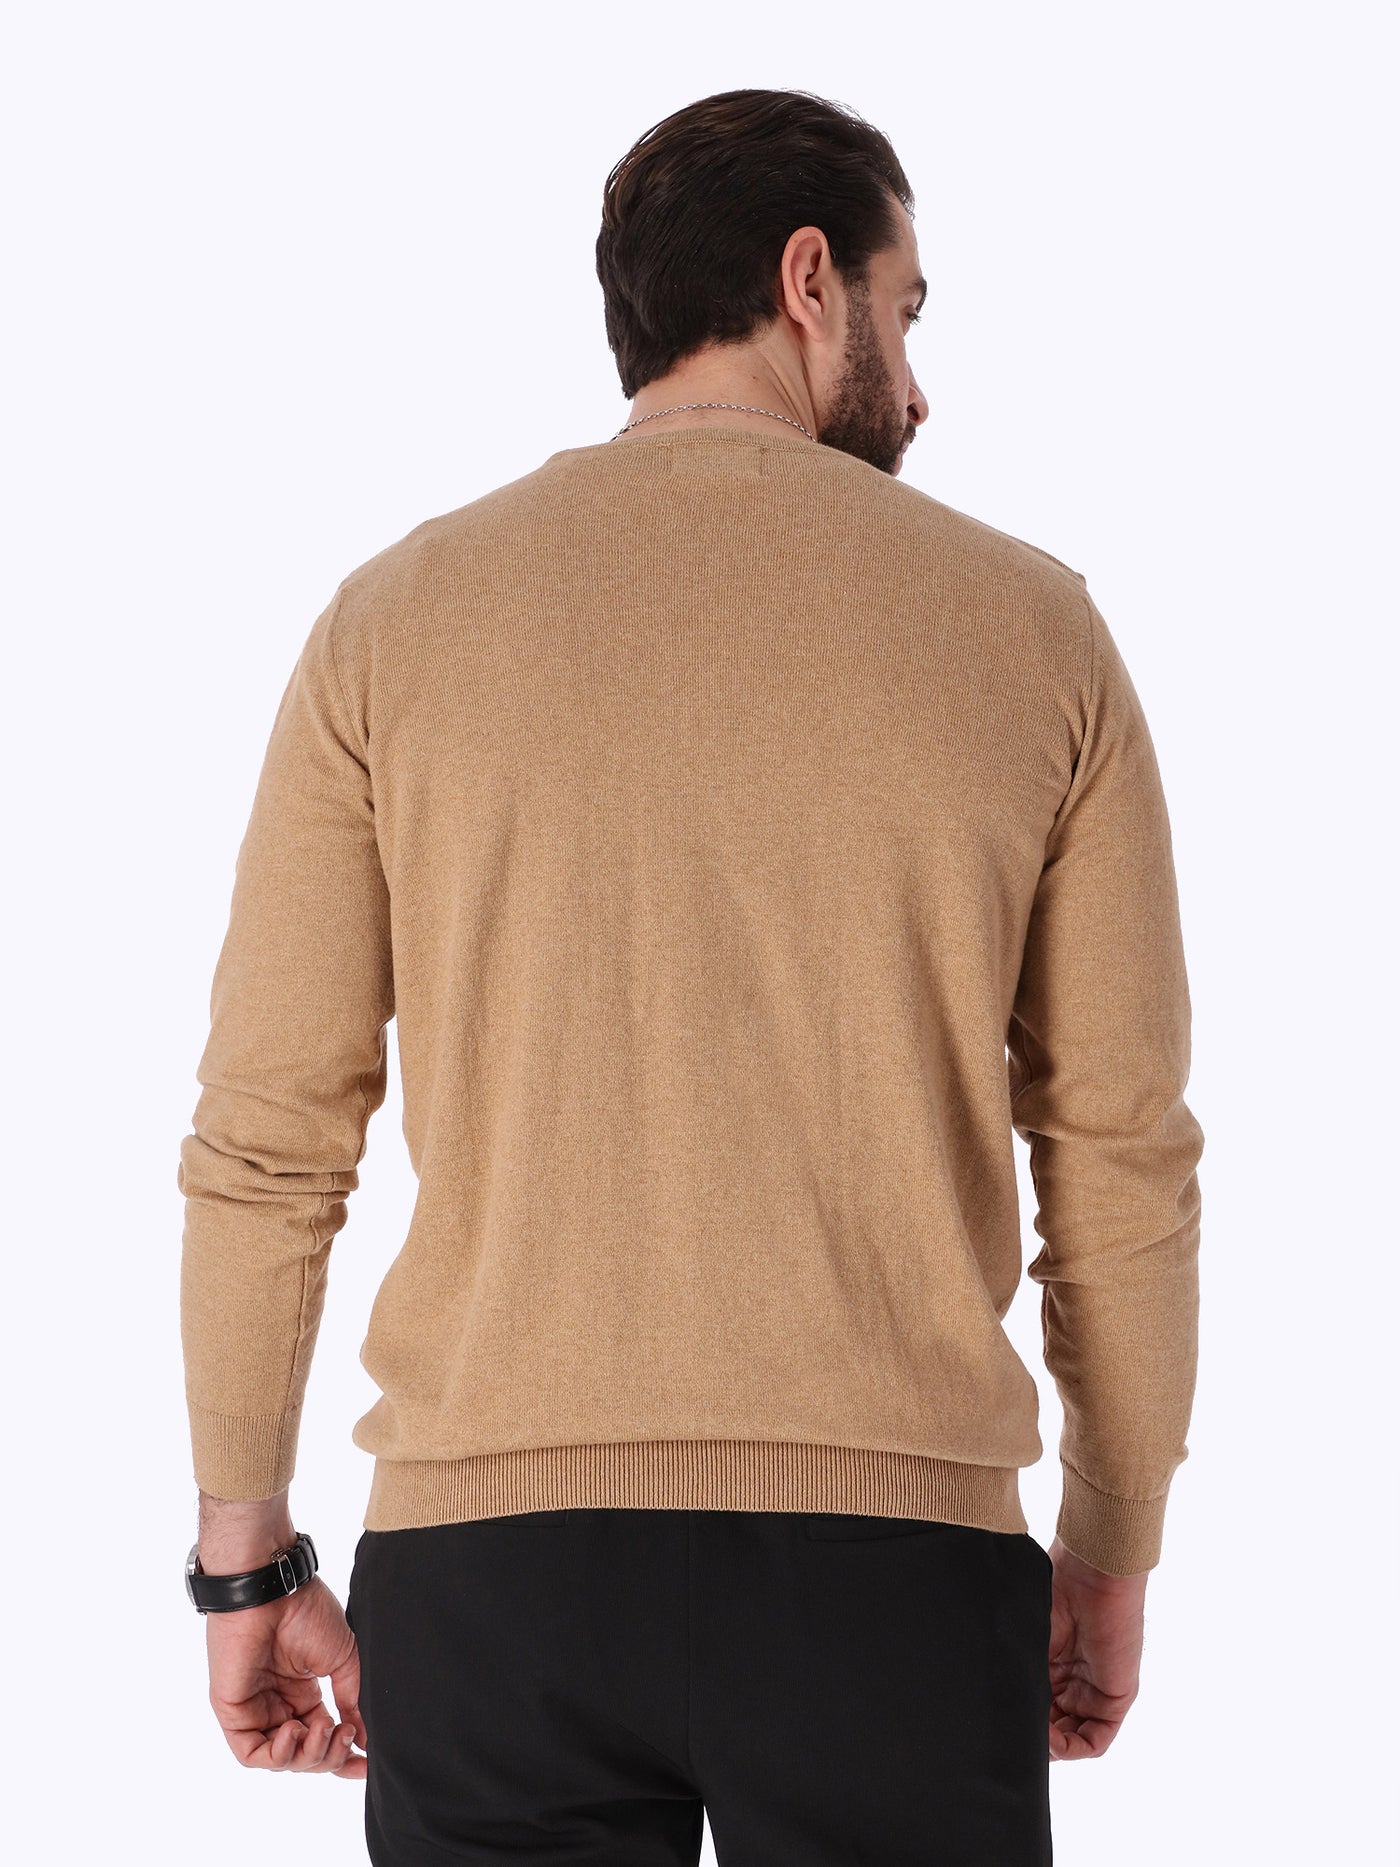 Sweater - Plain